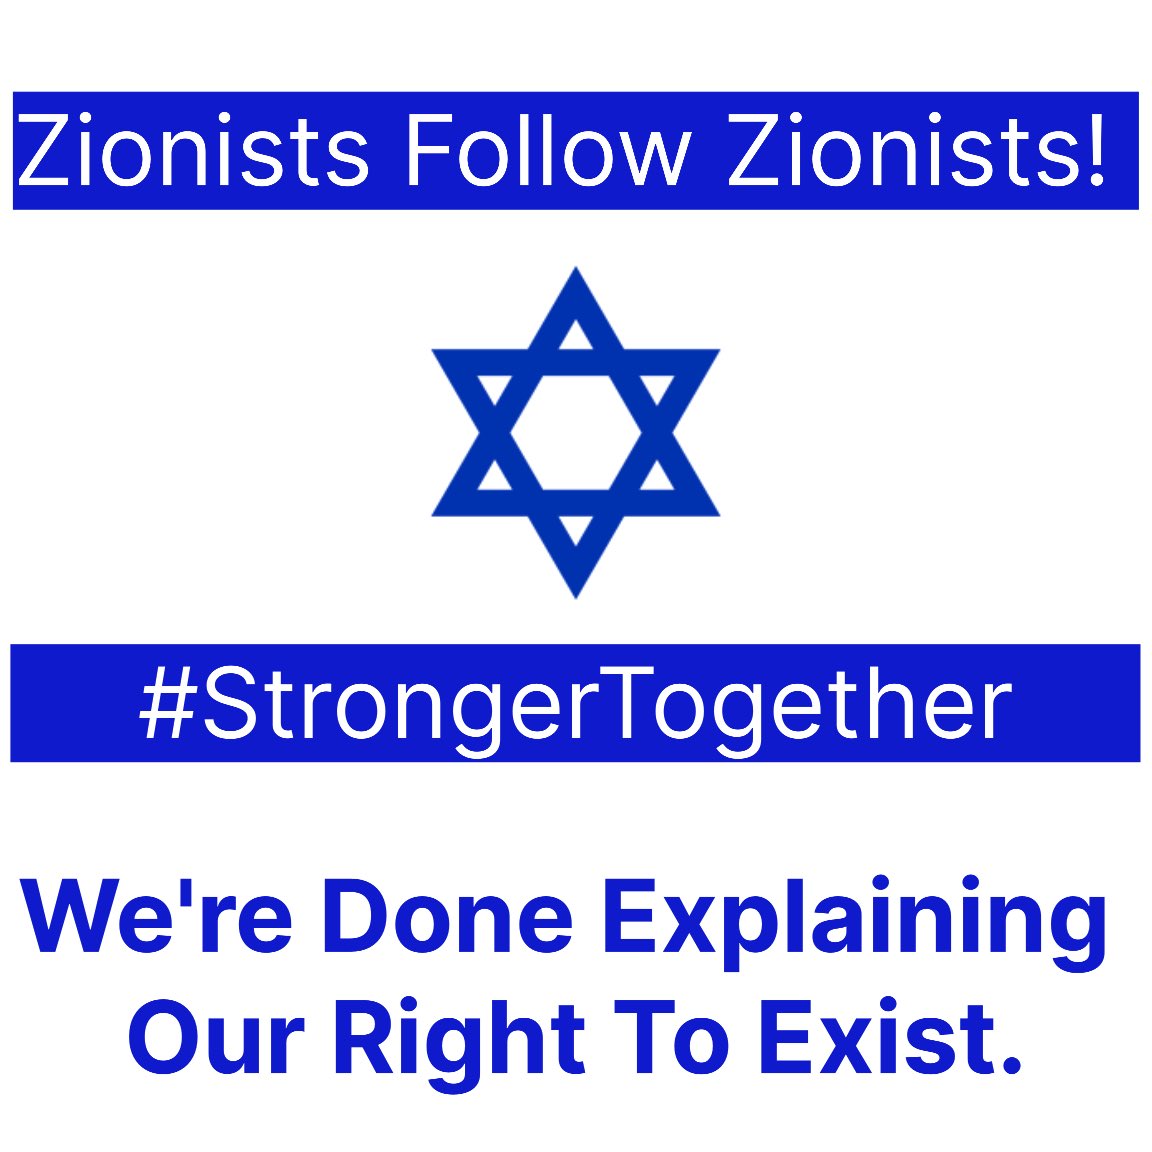 Boost #61 pro-Israel accounts under 1K. #ZionistsFollowZionists #StrongerTogether

@ChristlRoe96064 
@DebbySprtMassag 
@EmeraldIsle95 
@AMjetpilot
@landy_lion 
@Rabbi_Belman 
@j_yinzer 
@sollythedog
@goUSAgoIL 
@maniak9006 
@IsiSolo1
@AlexO7250